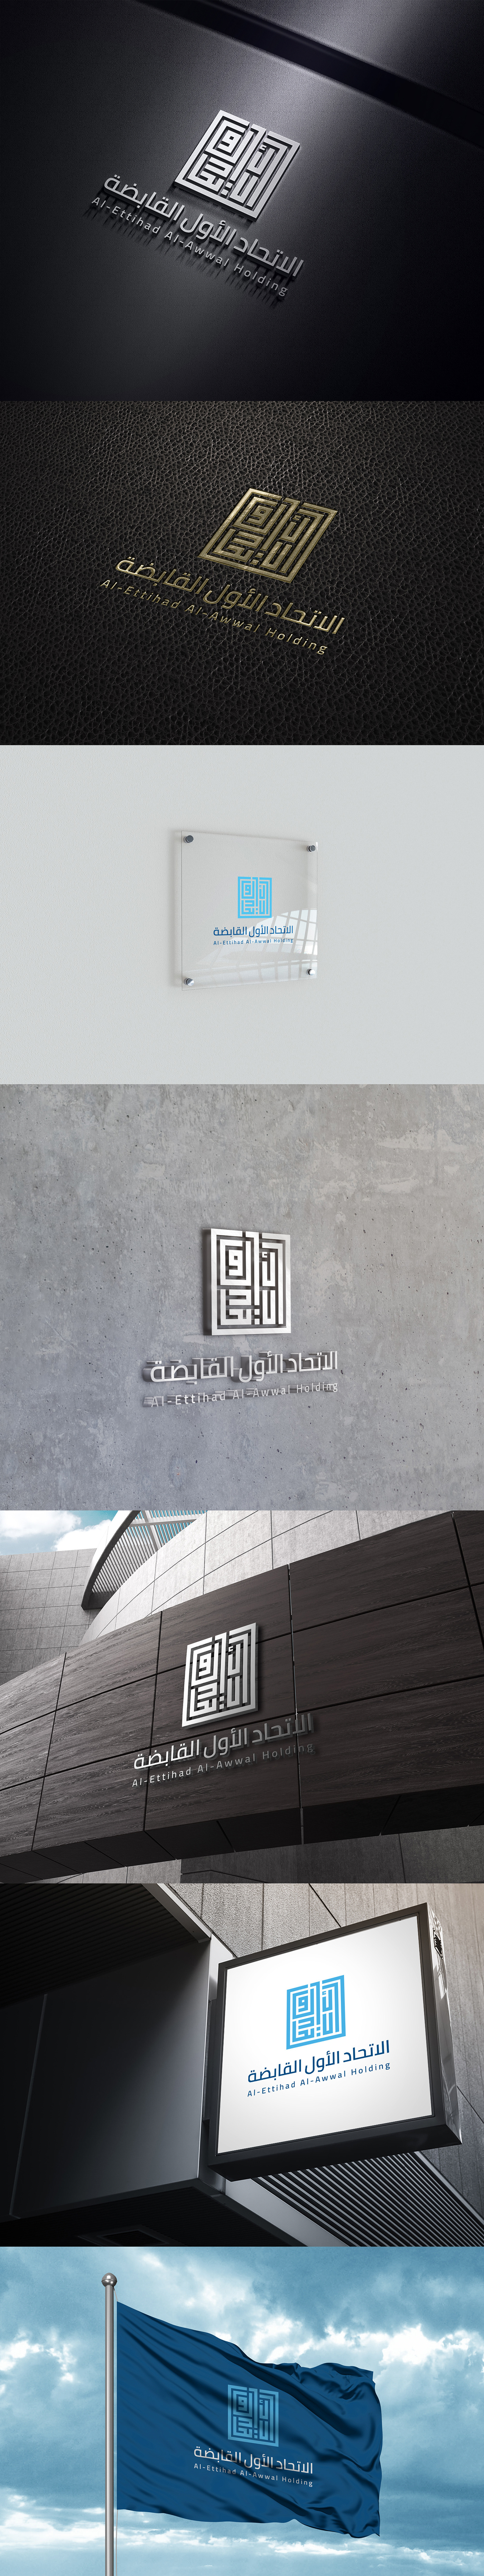 arabic brand company corporate identity logo square visual identity KSA first